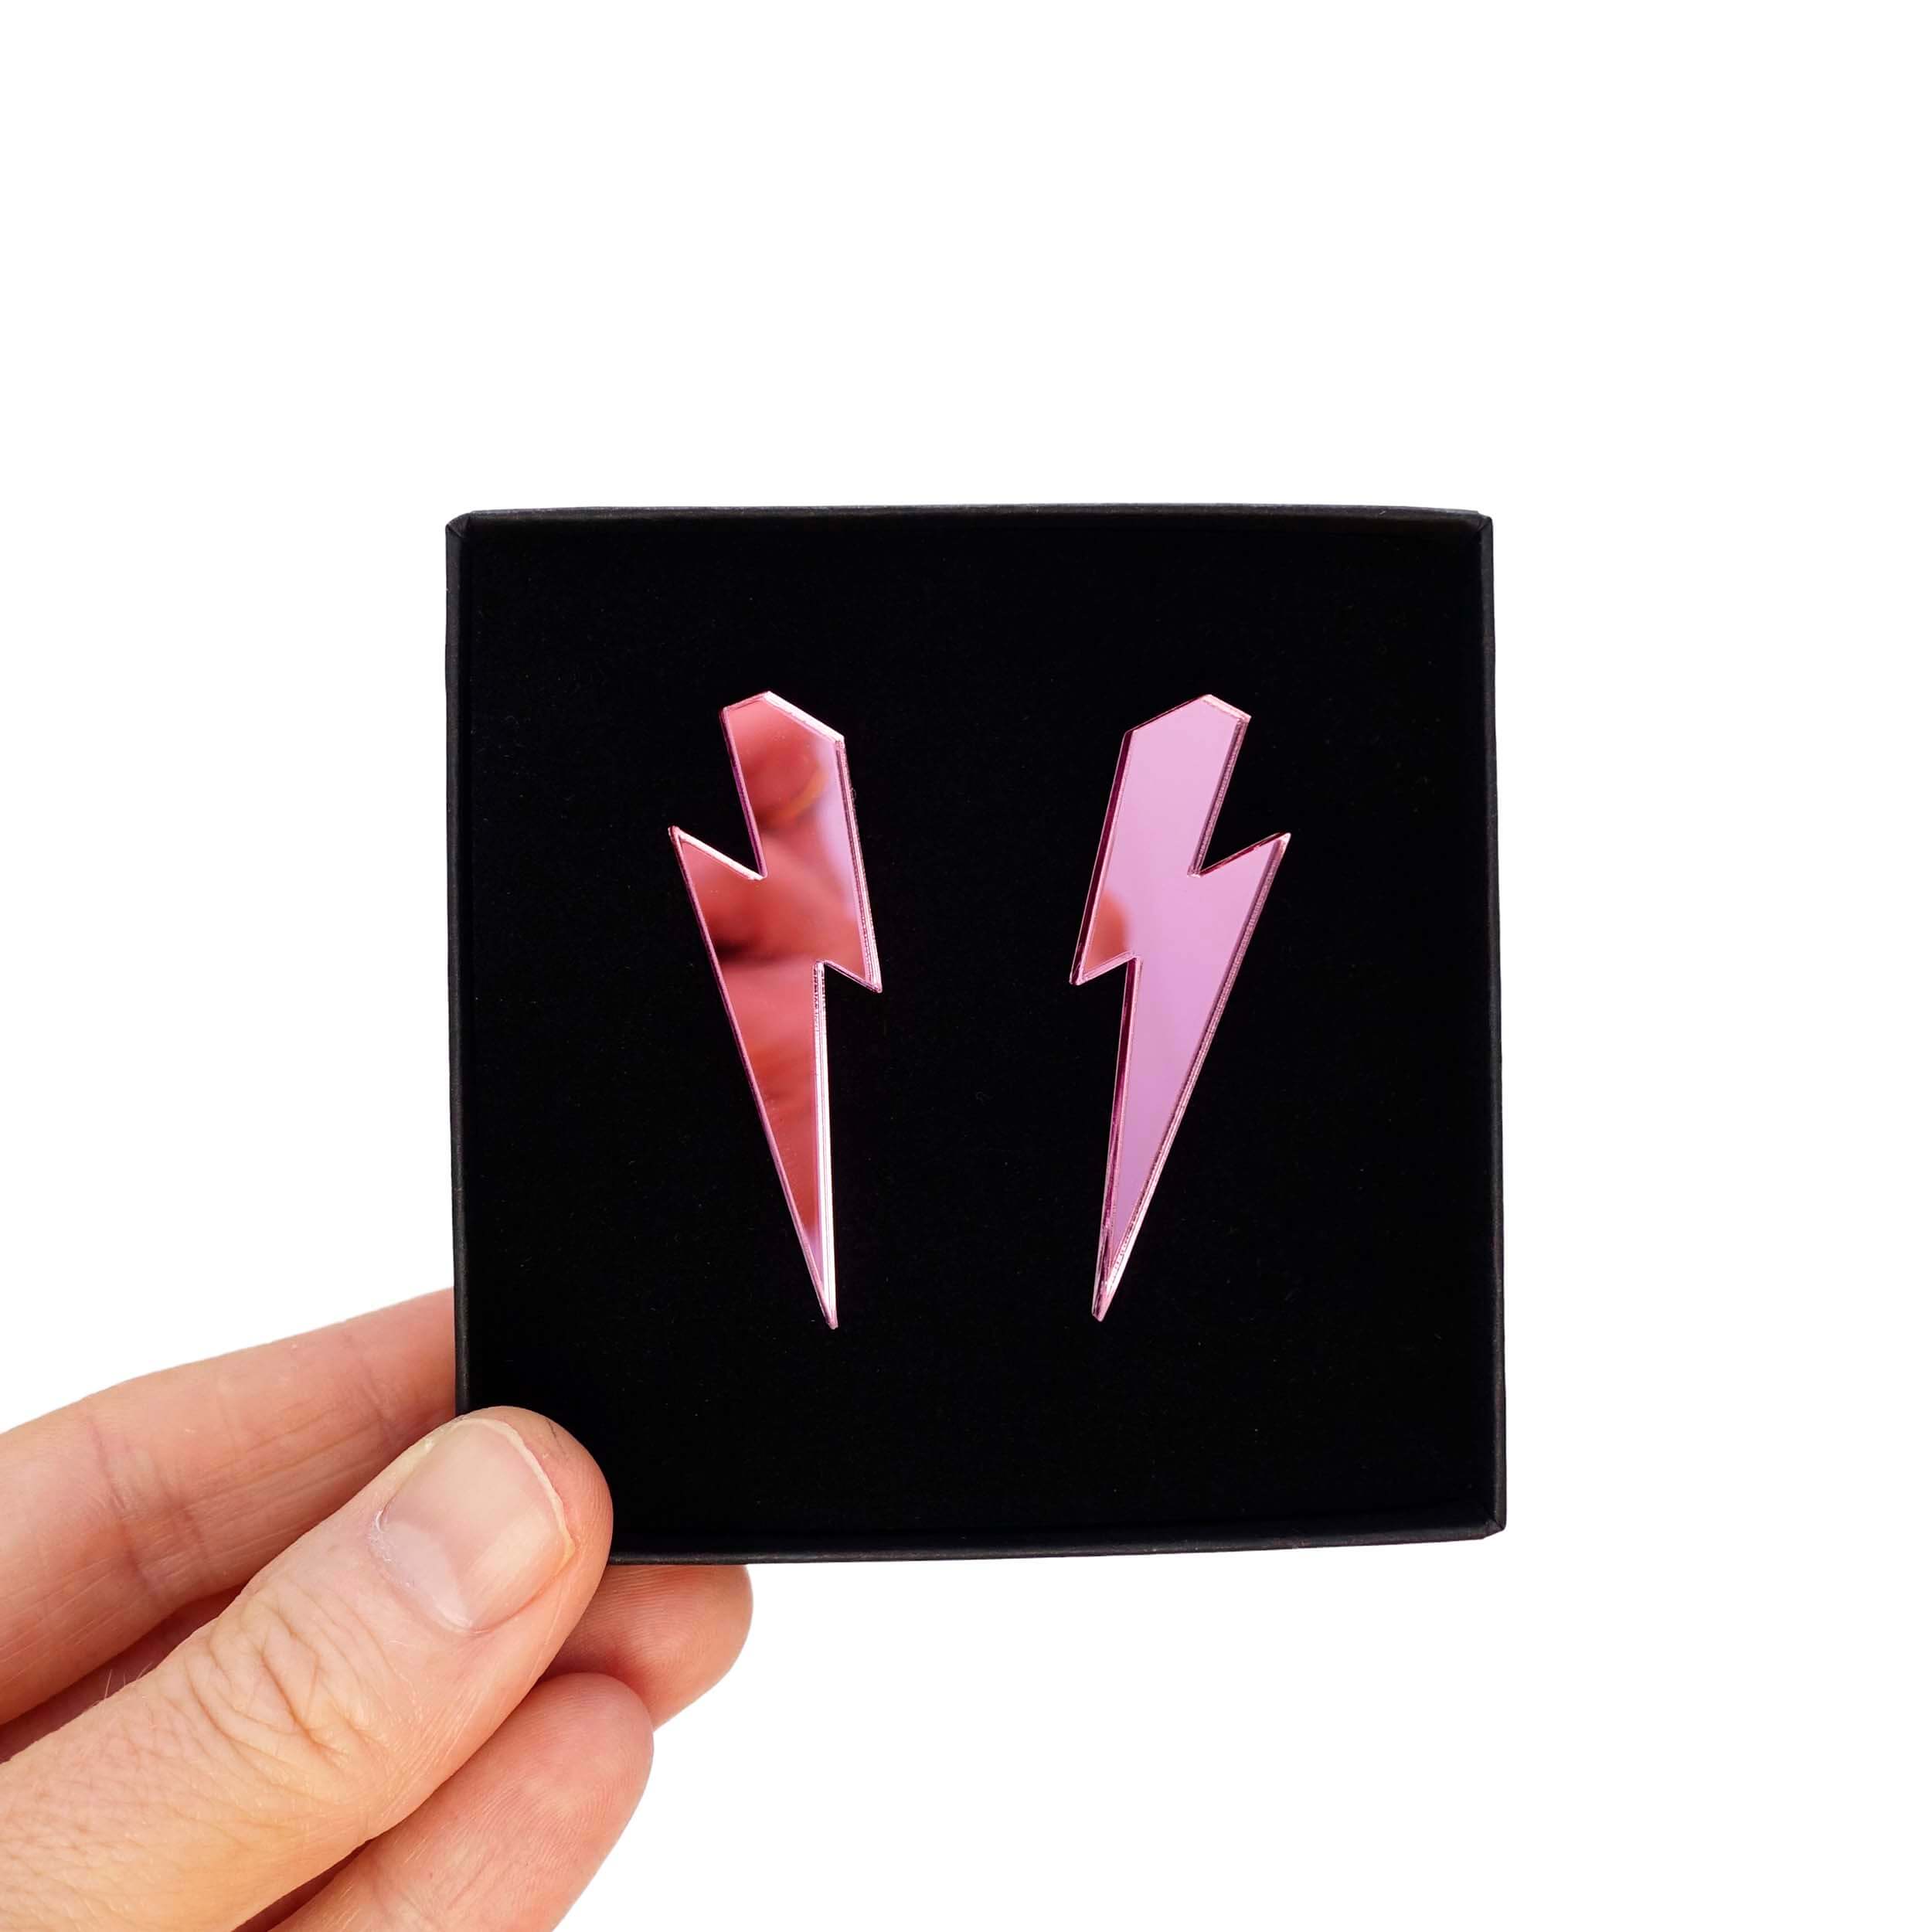 Large lightning bolt earrings in pink mirror. 